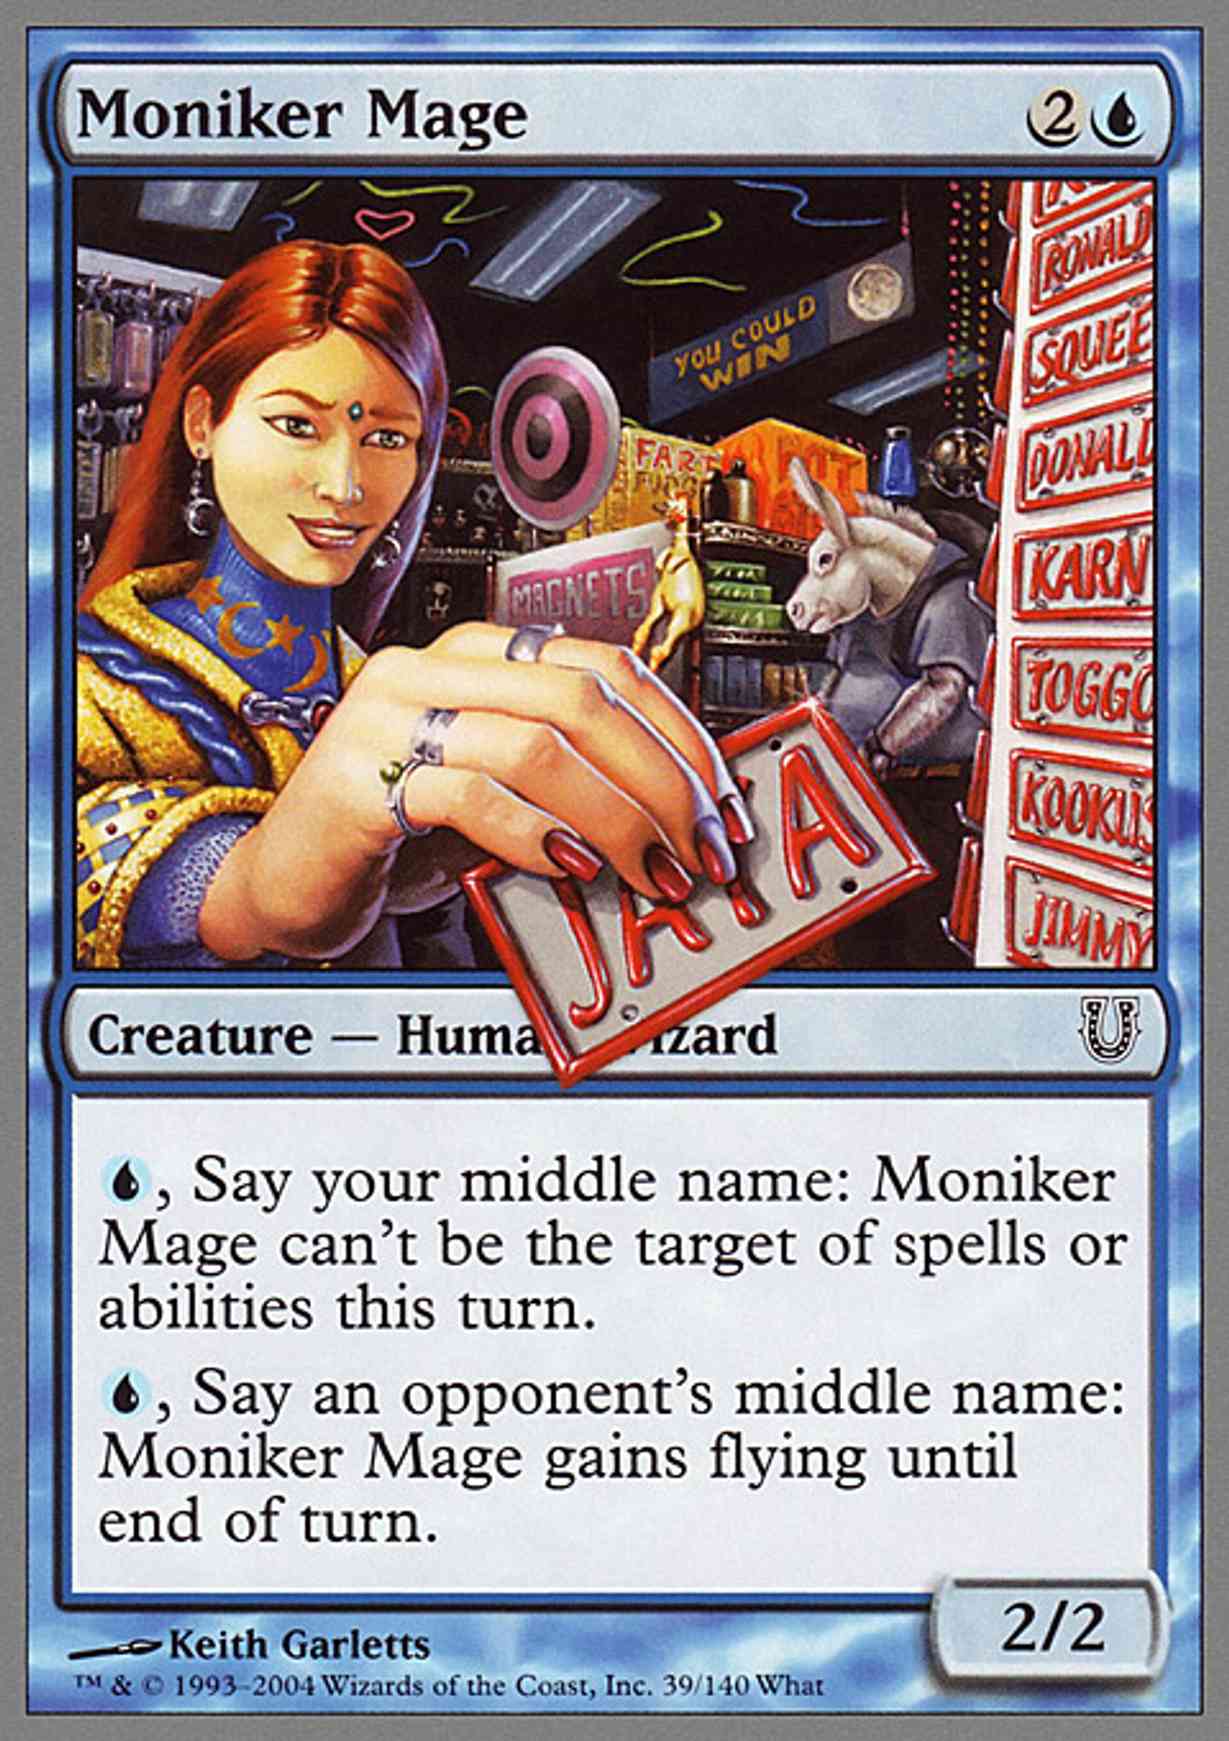 Moniker Mage magic card front